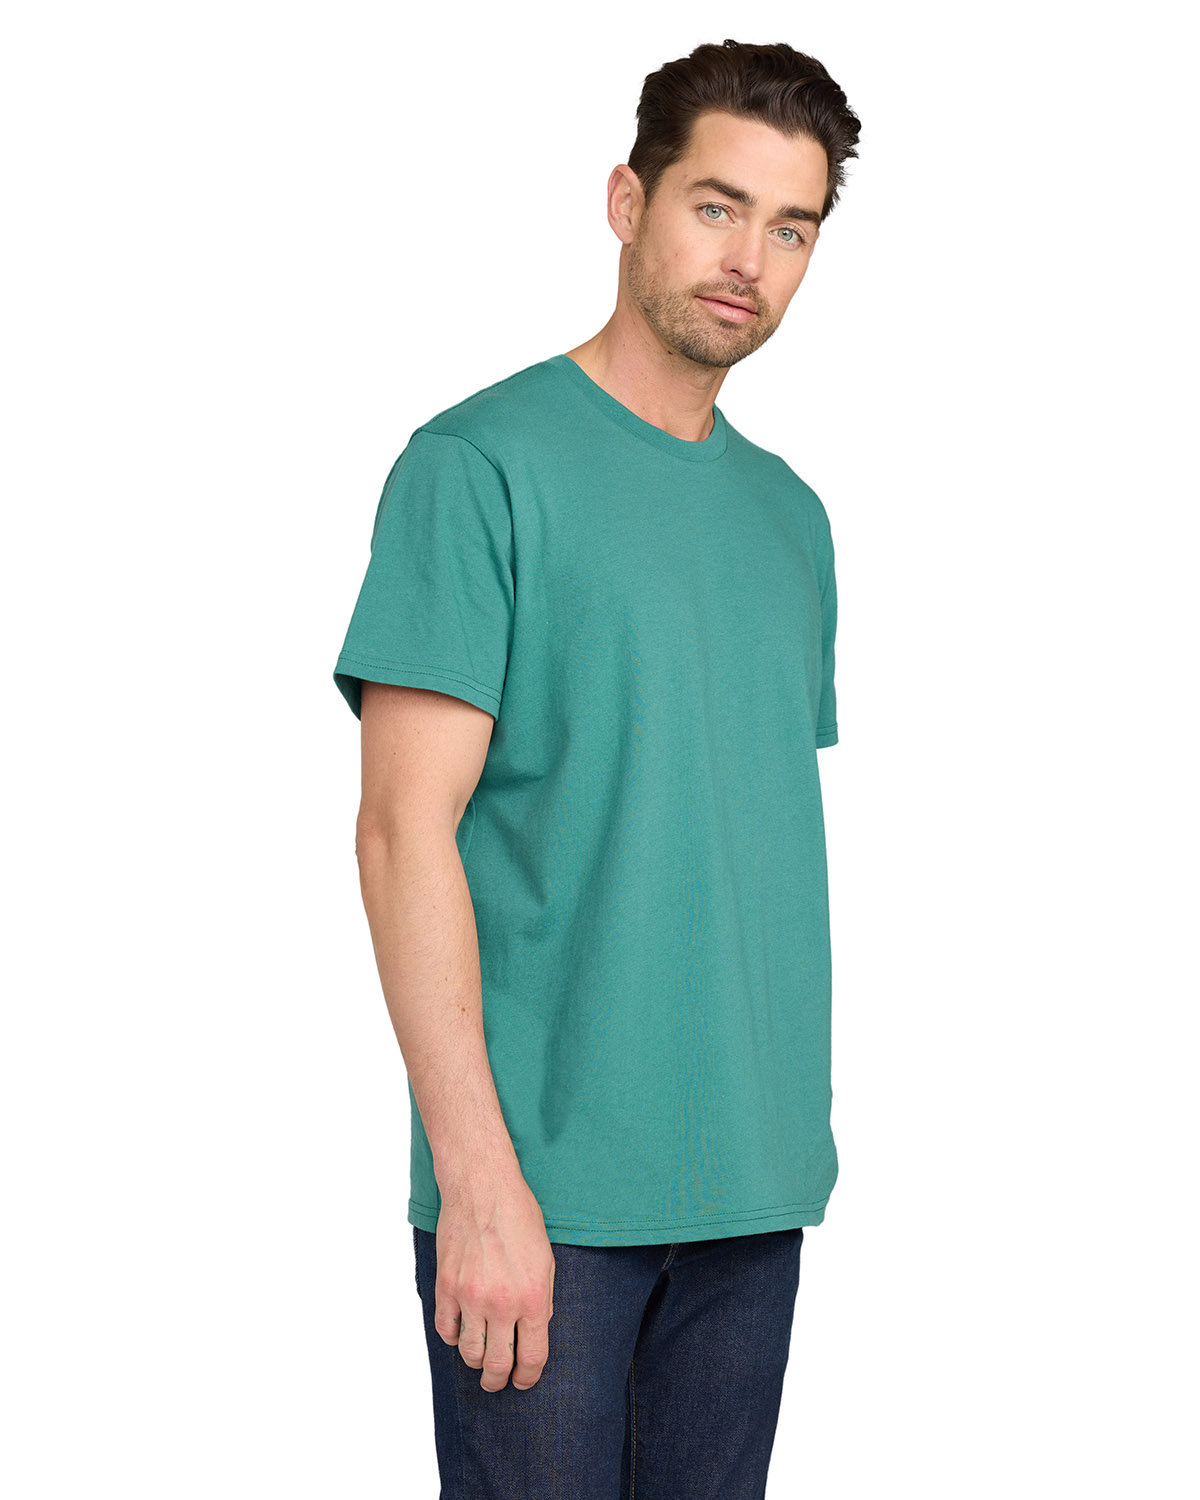 US Blanks Men's Made in USA Short Sleeve Crew T-Shirt | alphabroder